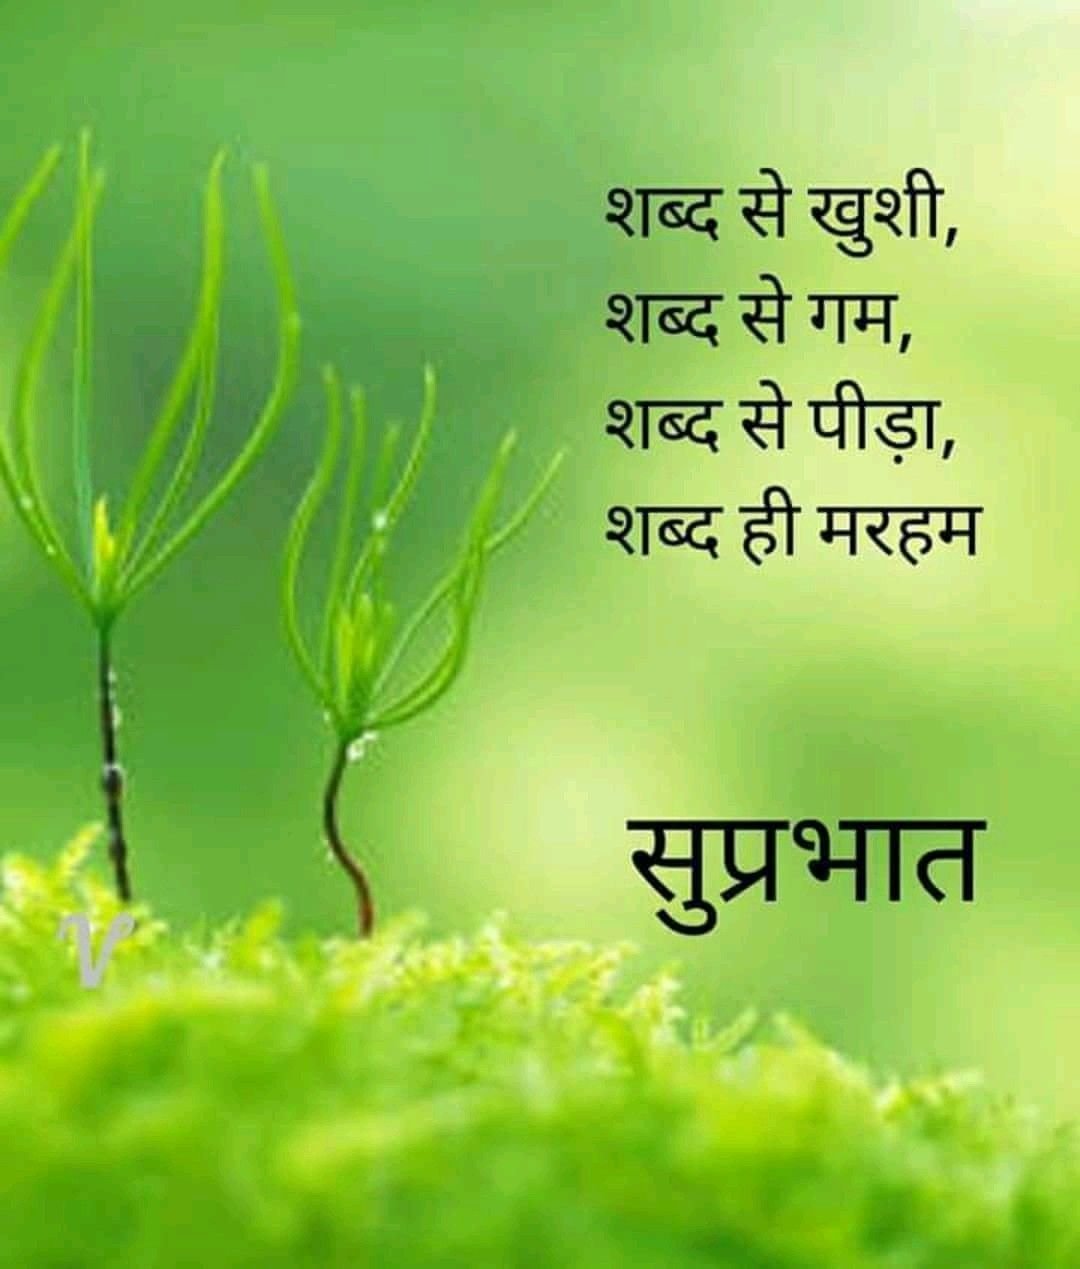 Good Morning images in Hindi